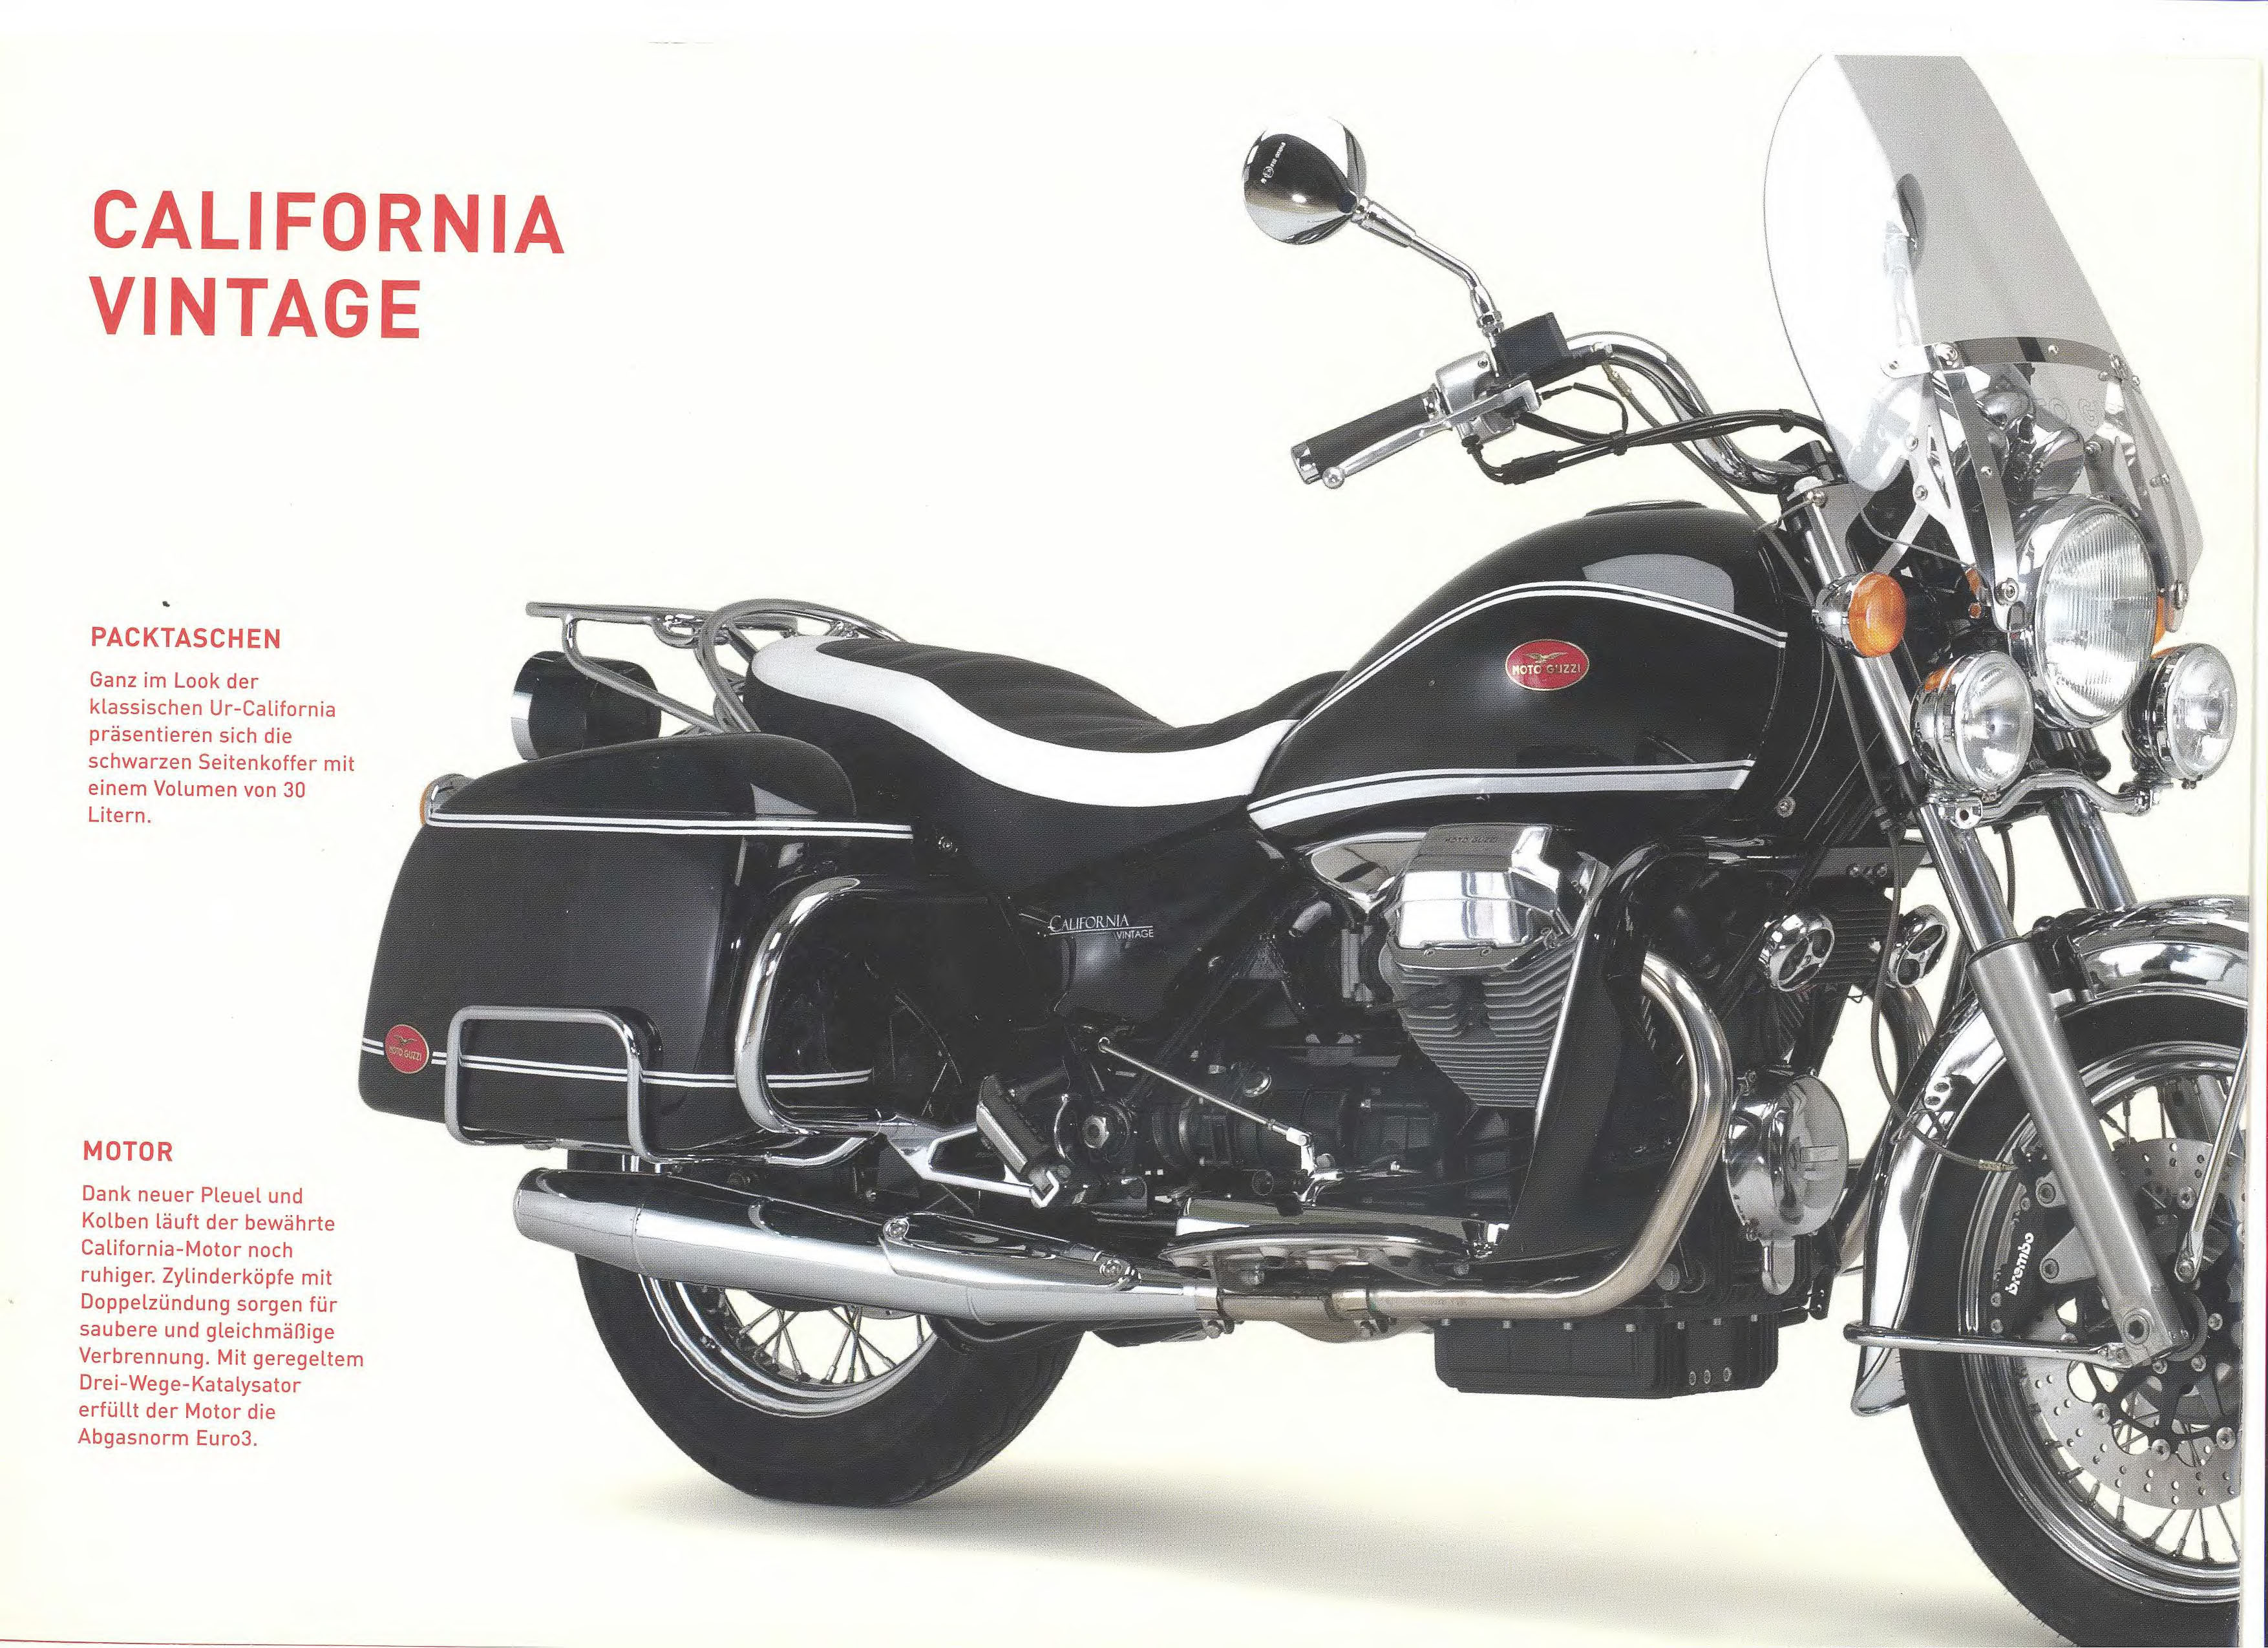 Moto Guzzi factory brochure: California Vintage